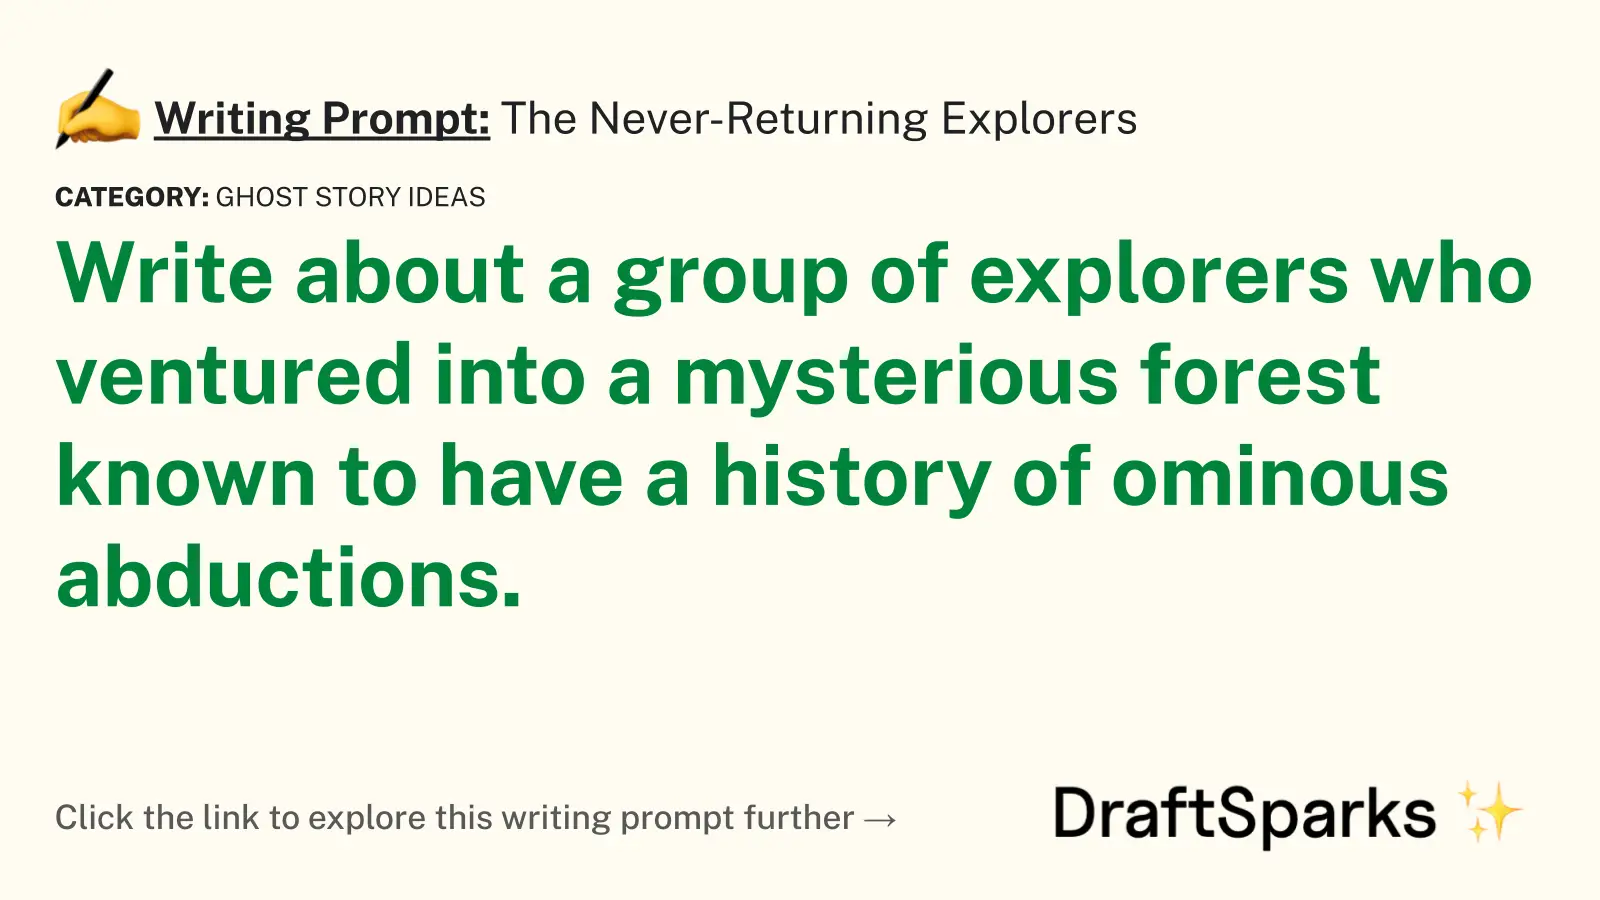 The Never-Returning Explorers